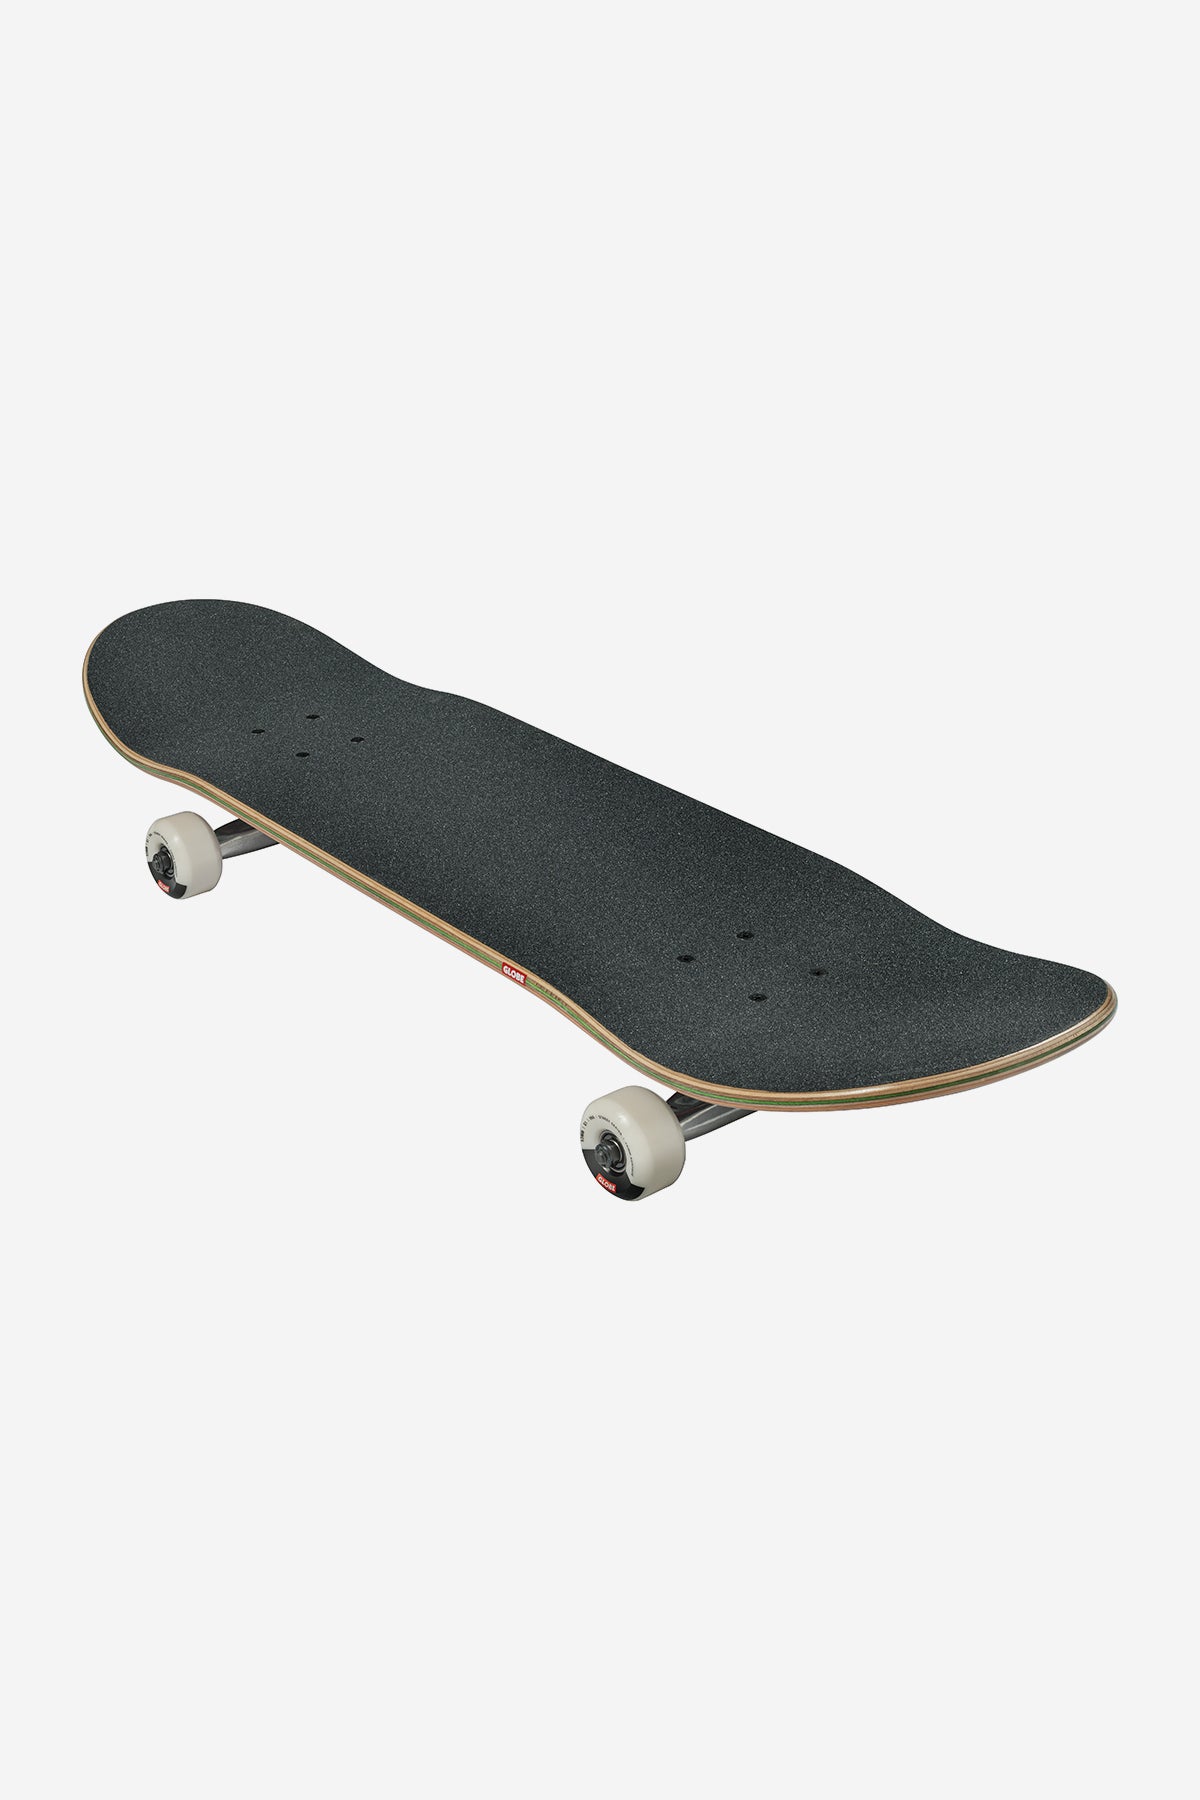 Globe - G1 Stack - Daydream - 8.25" complet Skateboard